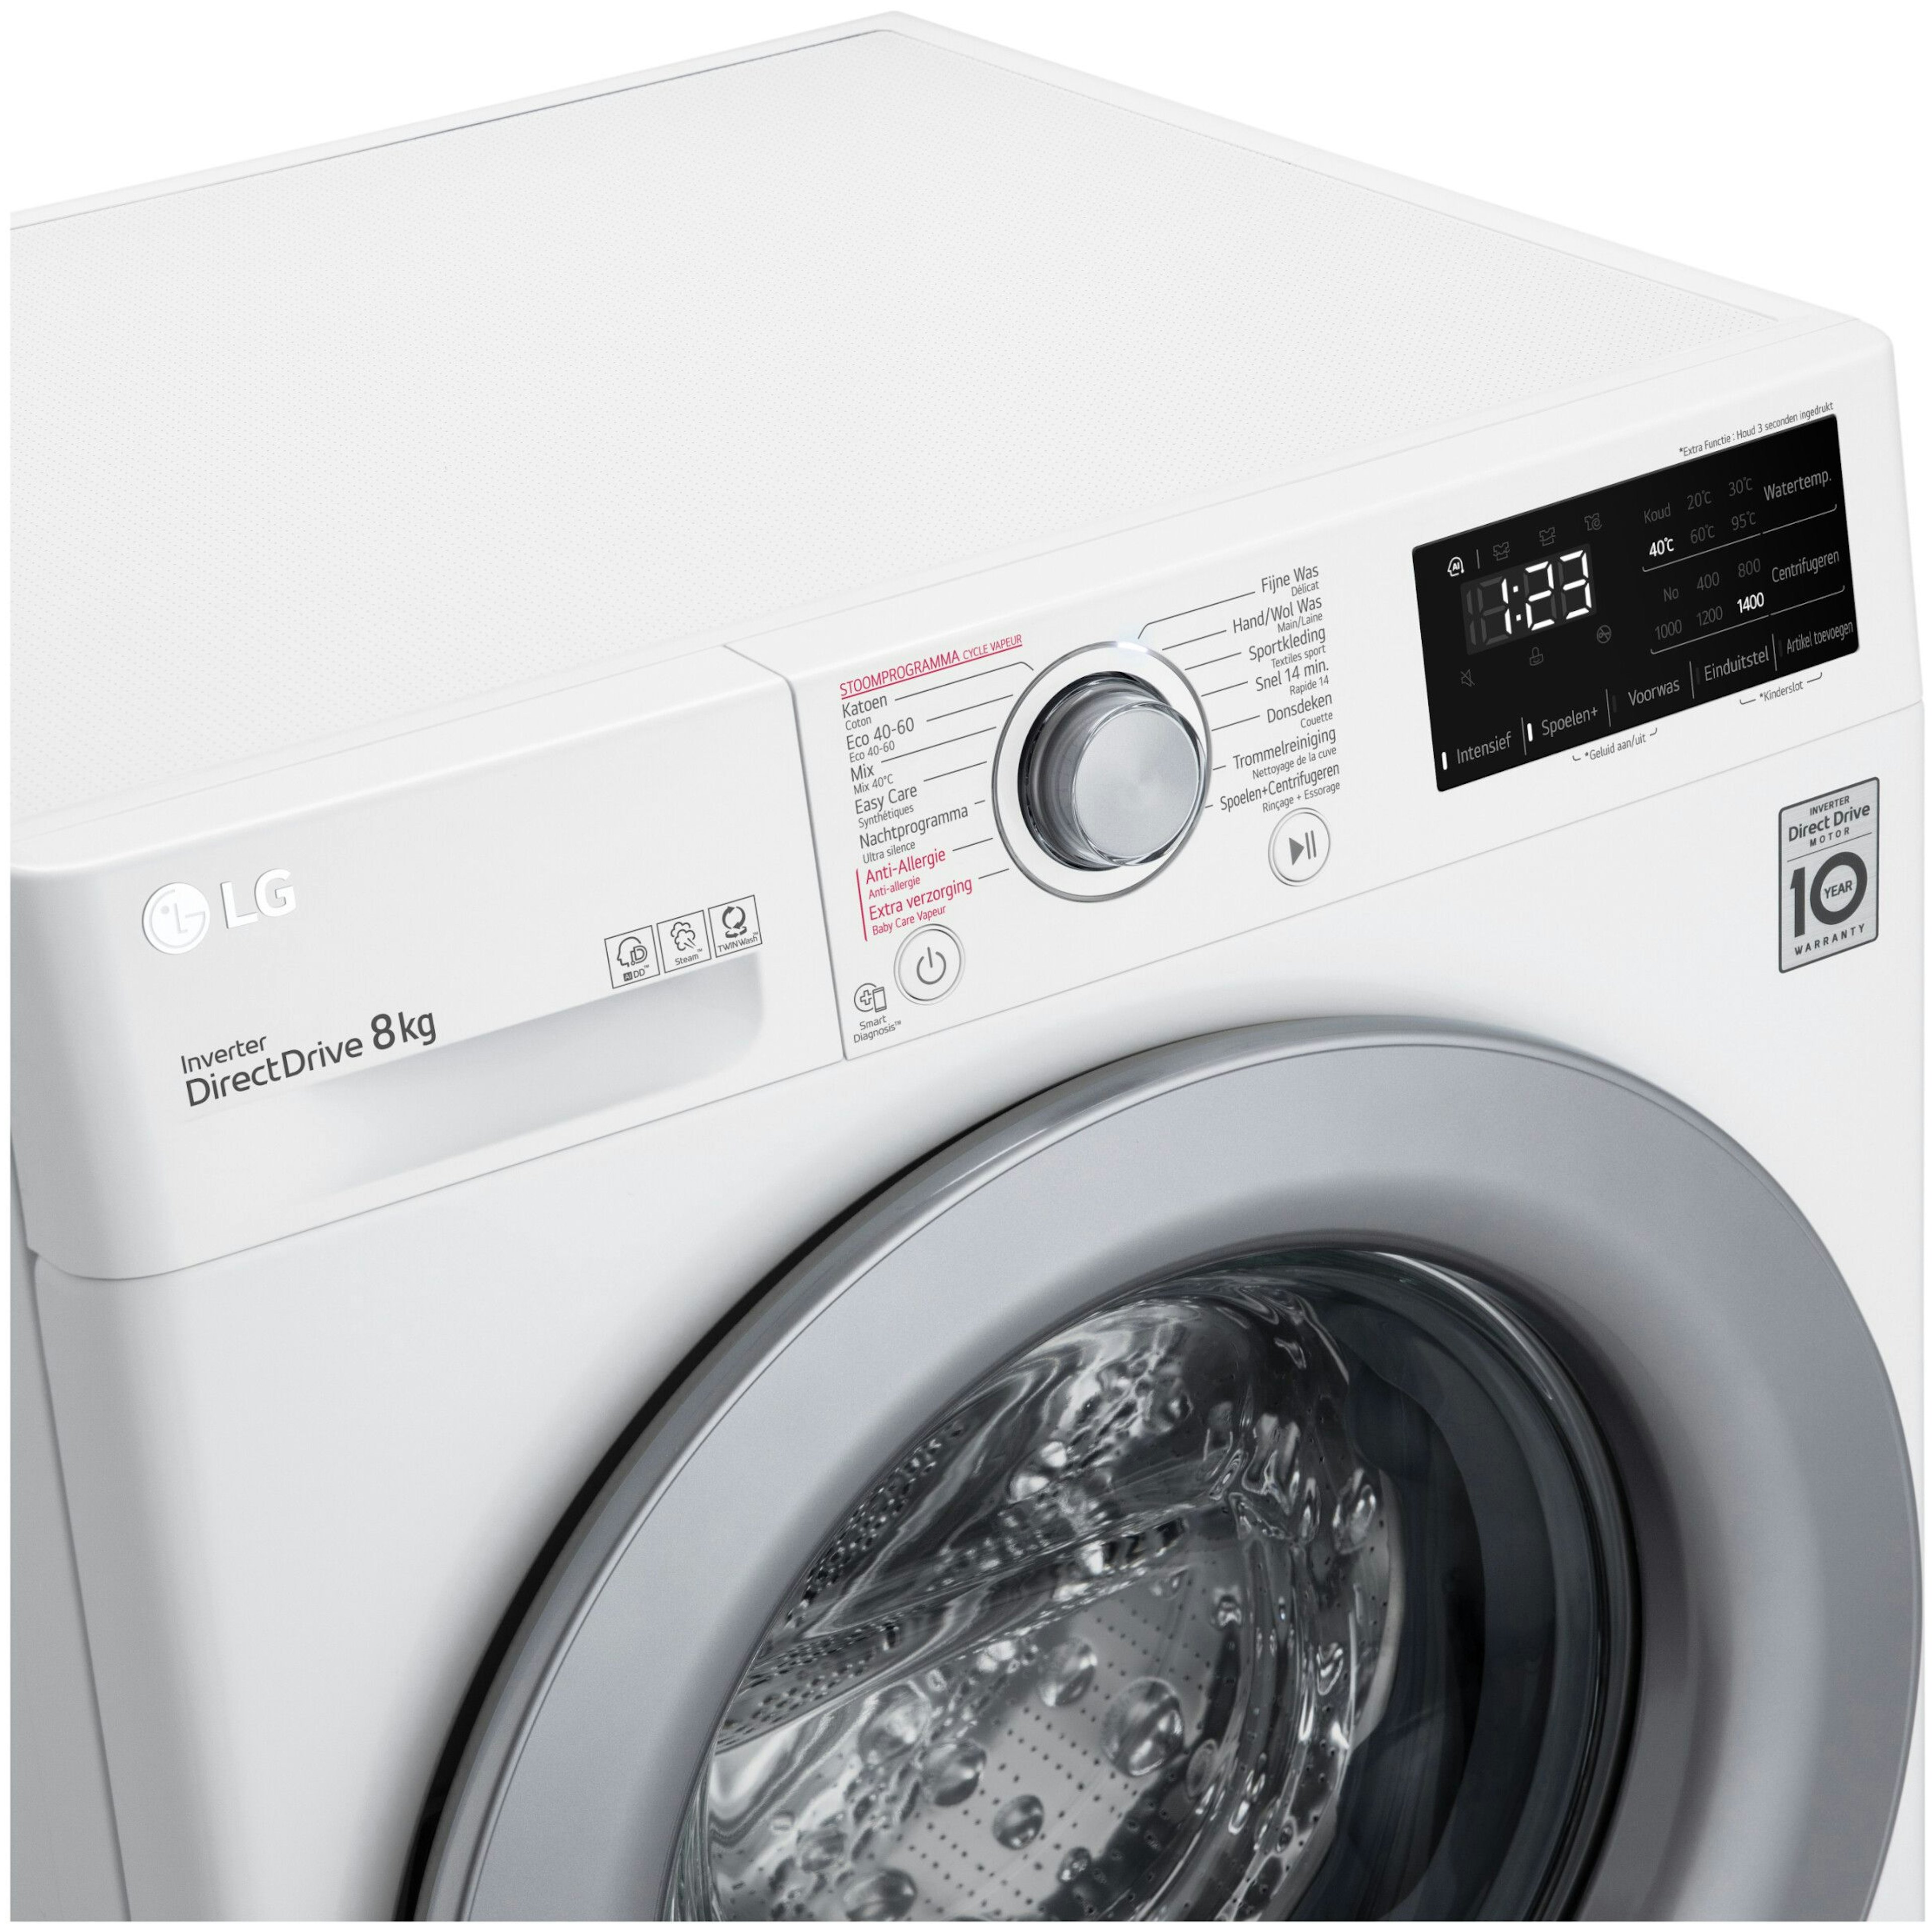 LG wasmachine F4WV308S4B afbeelding 3